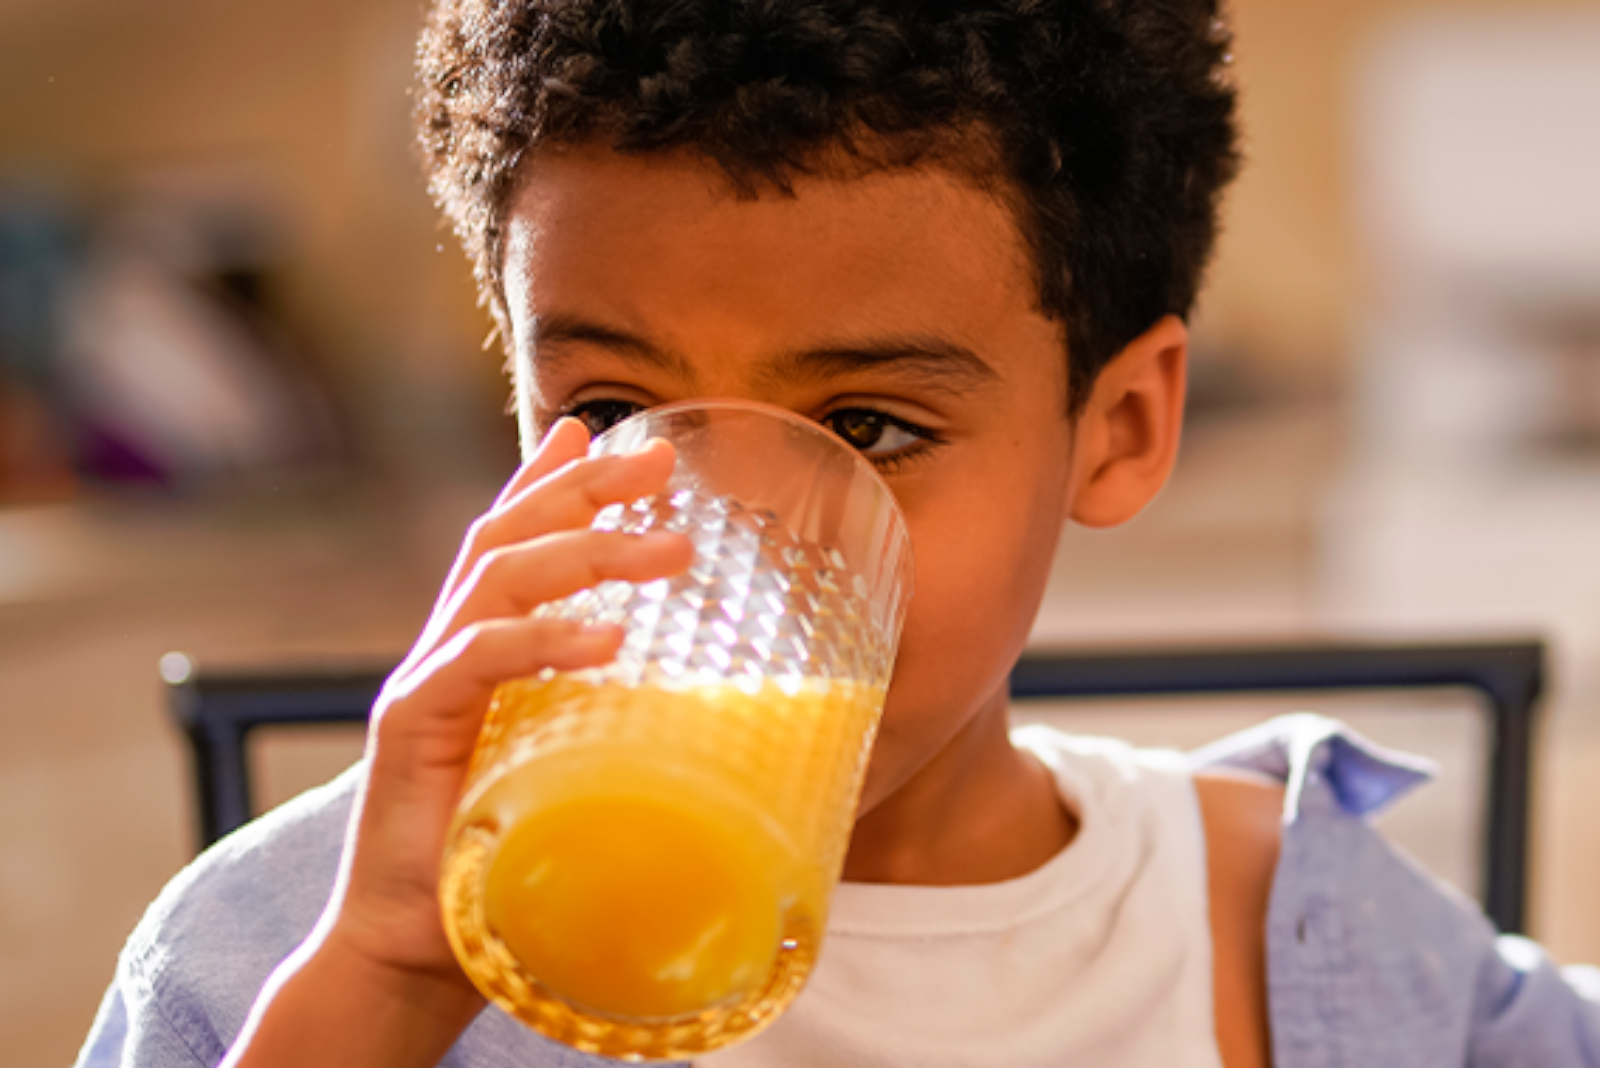 Should children avoid fruit juice?